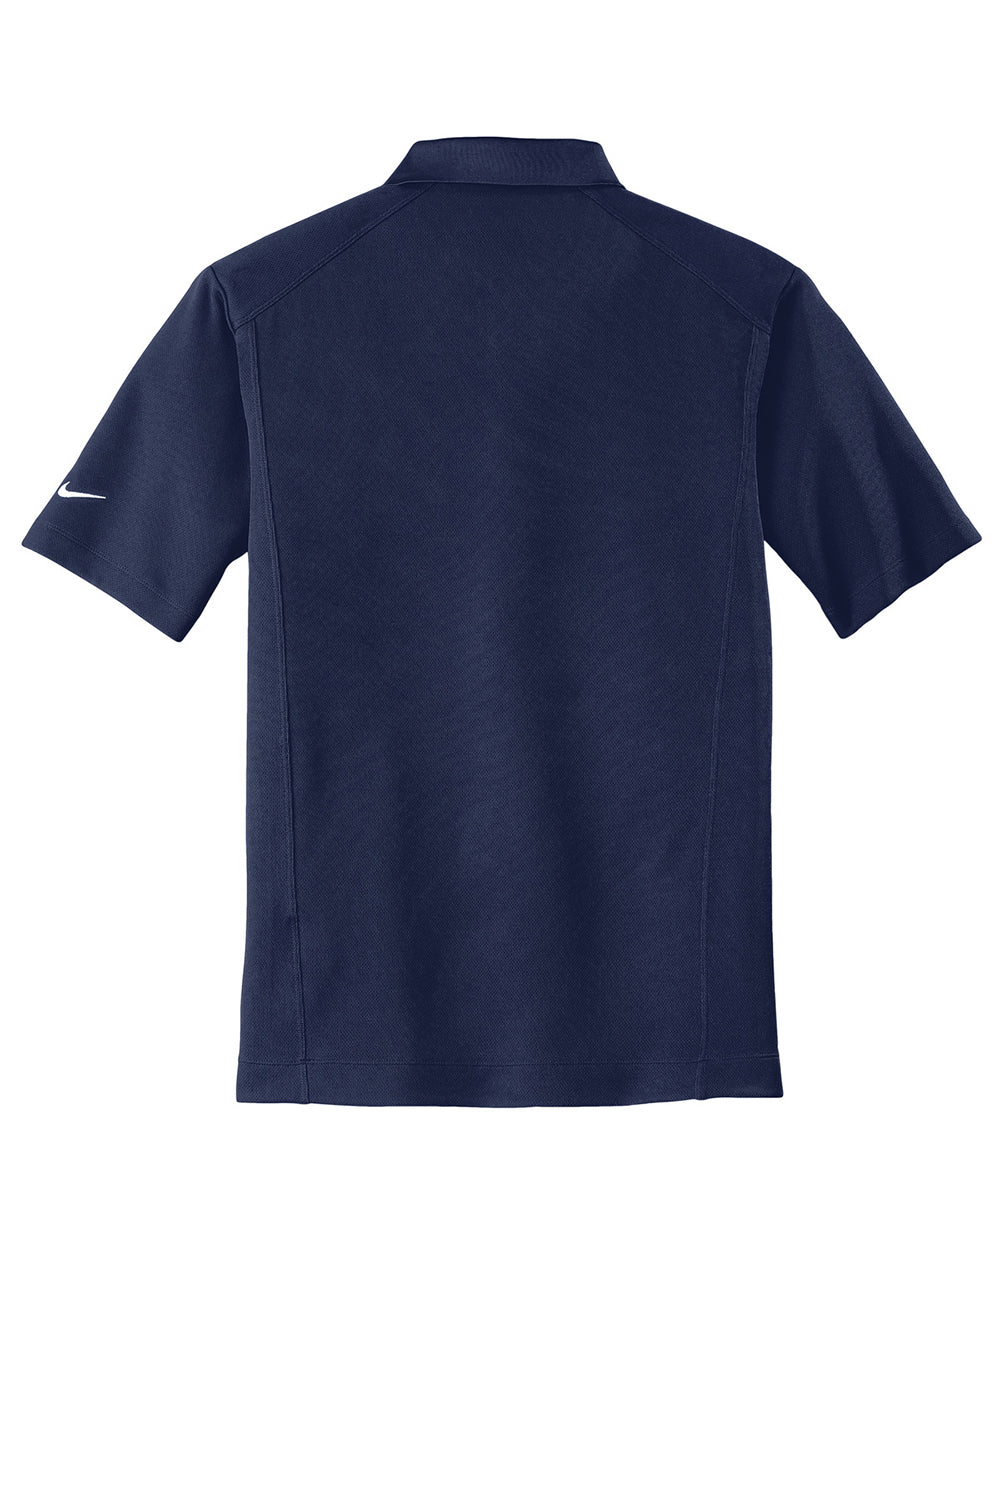 Nike 267020 Mens Classic Dri-Fit Moisture Wicking Short Sleeve Polo Shirt Midnight Navy Blue Flat Back